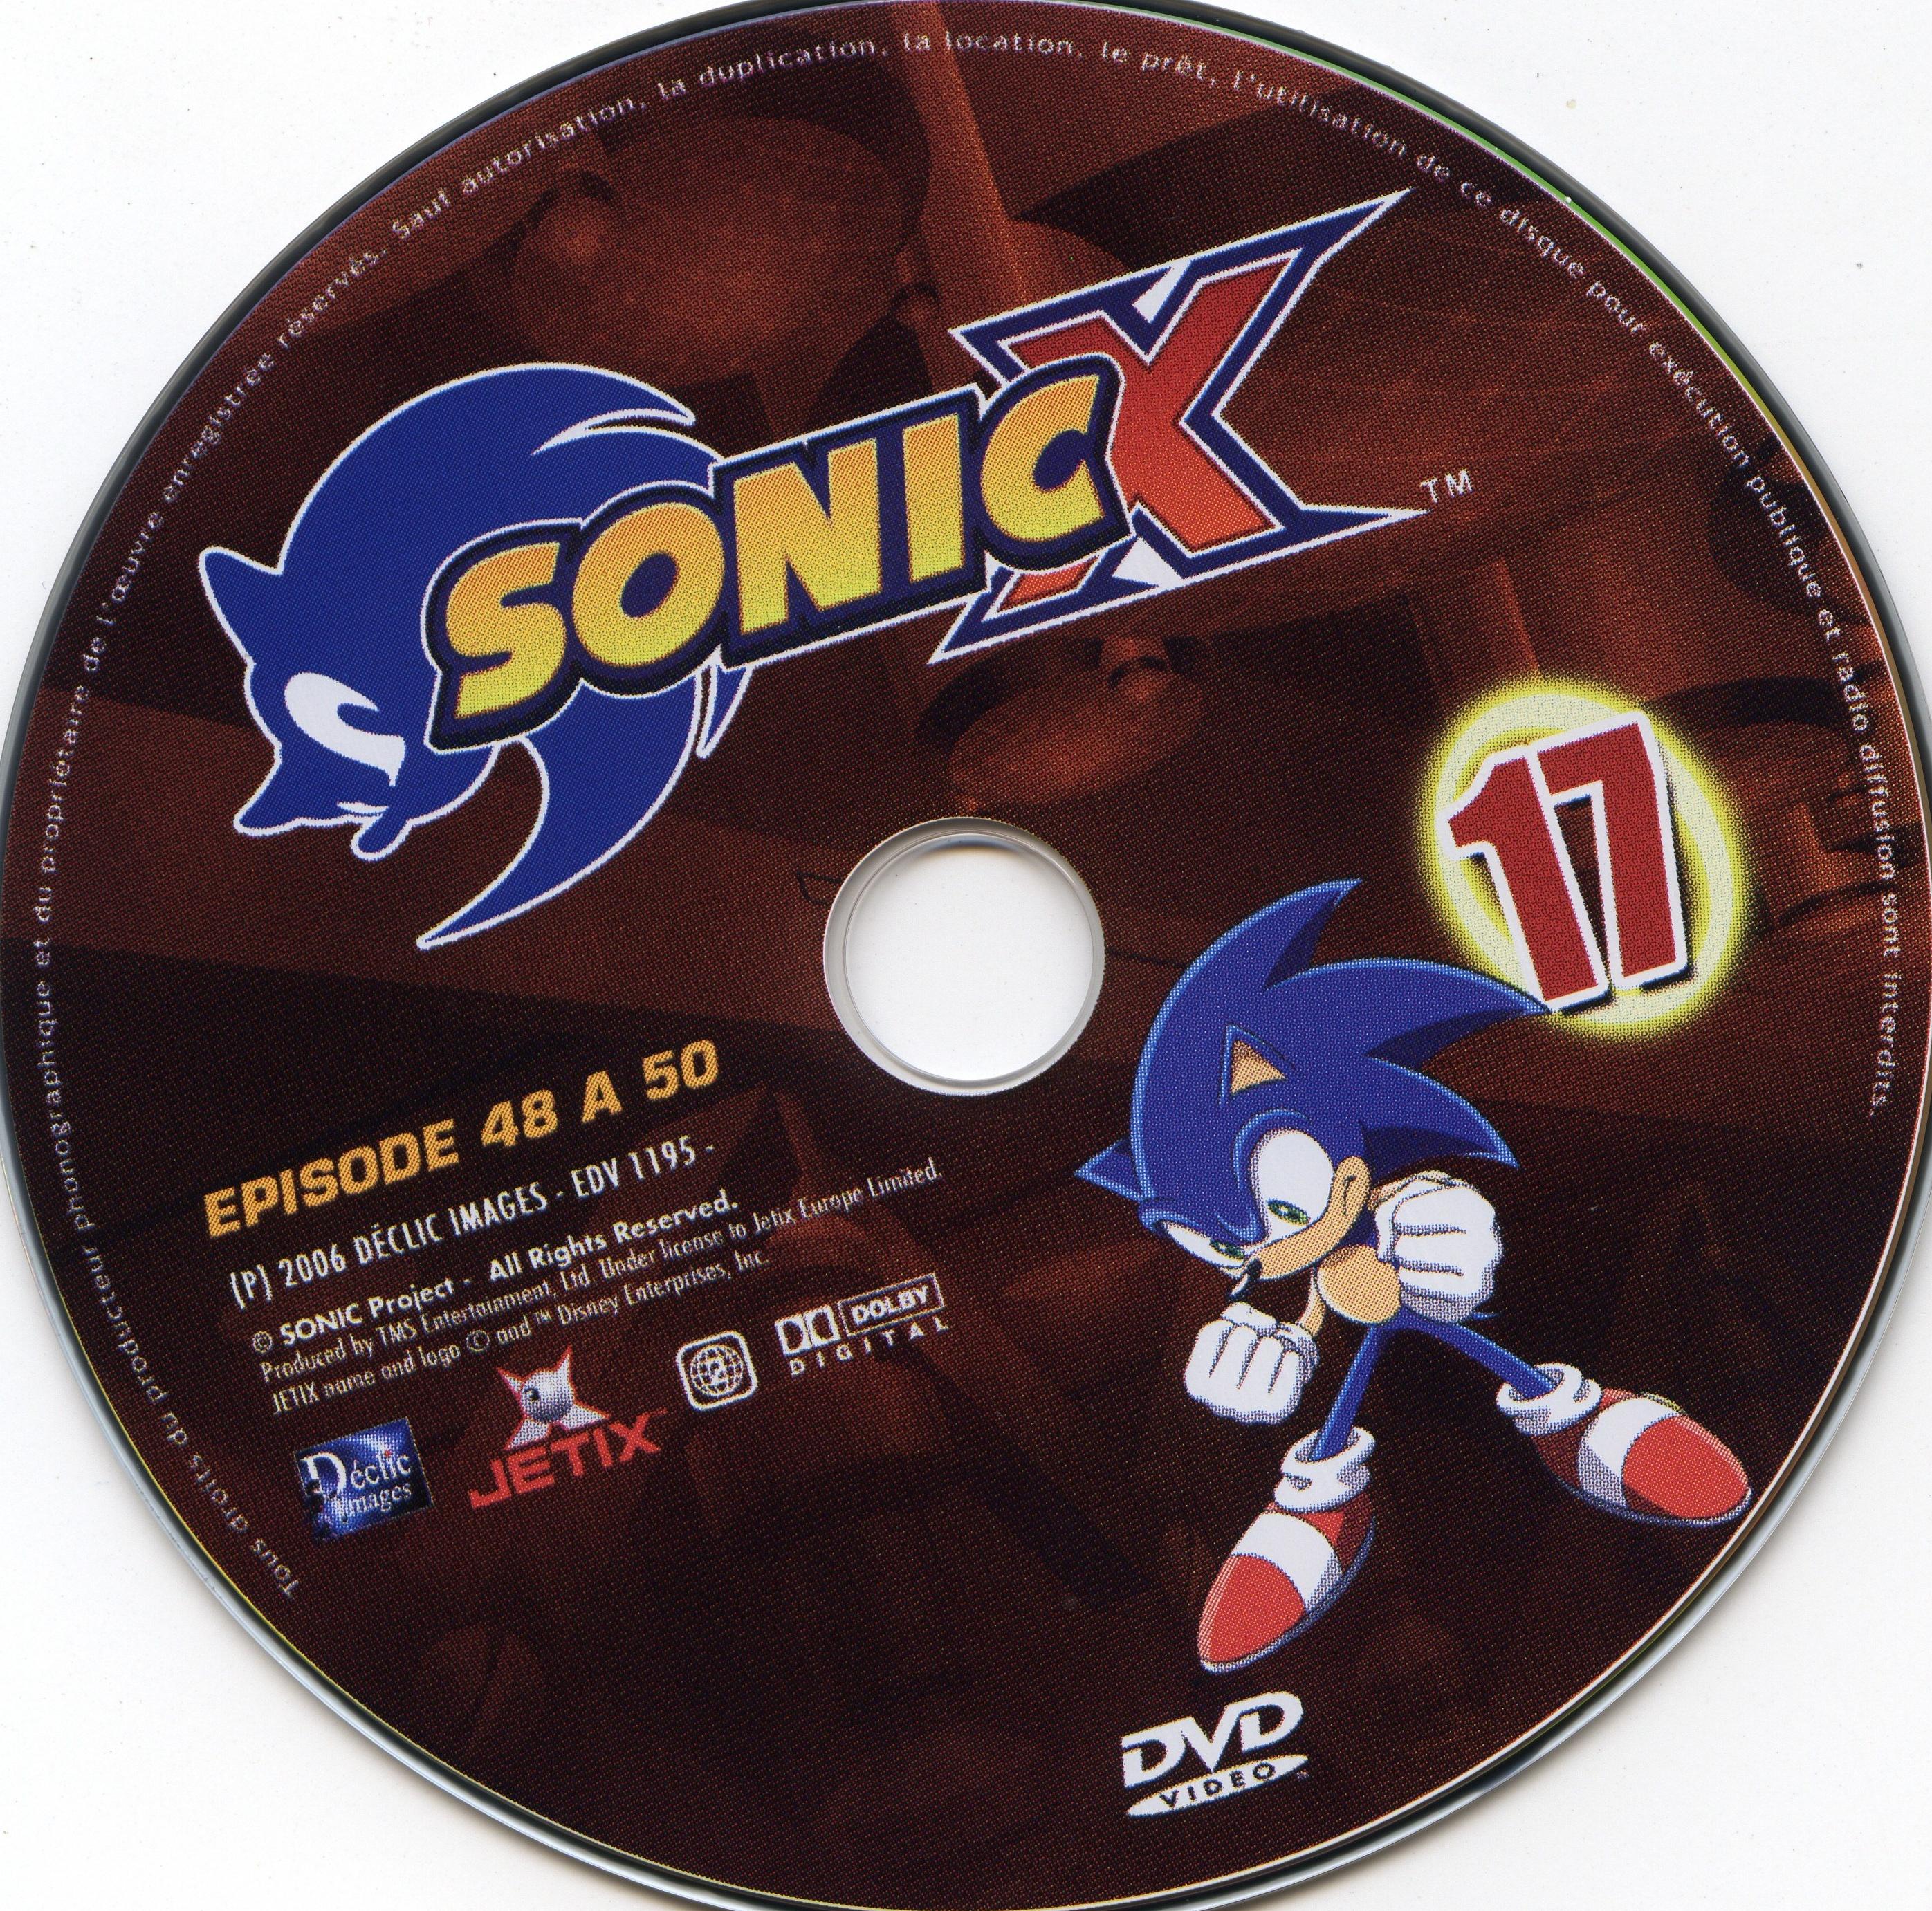 Sonic X vol 17